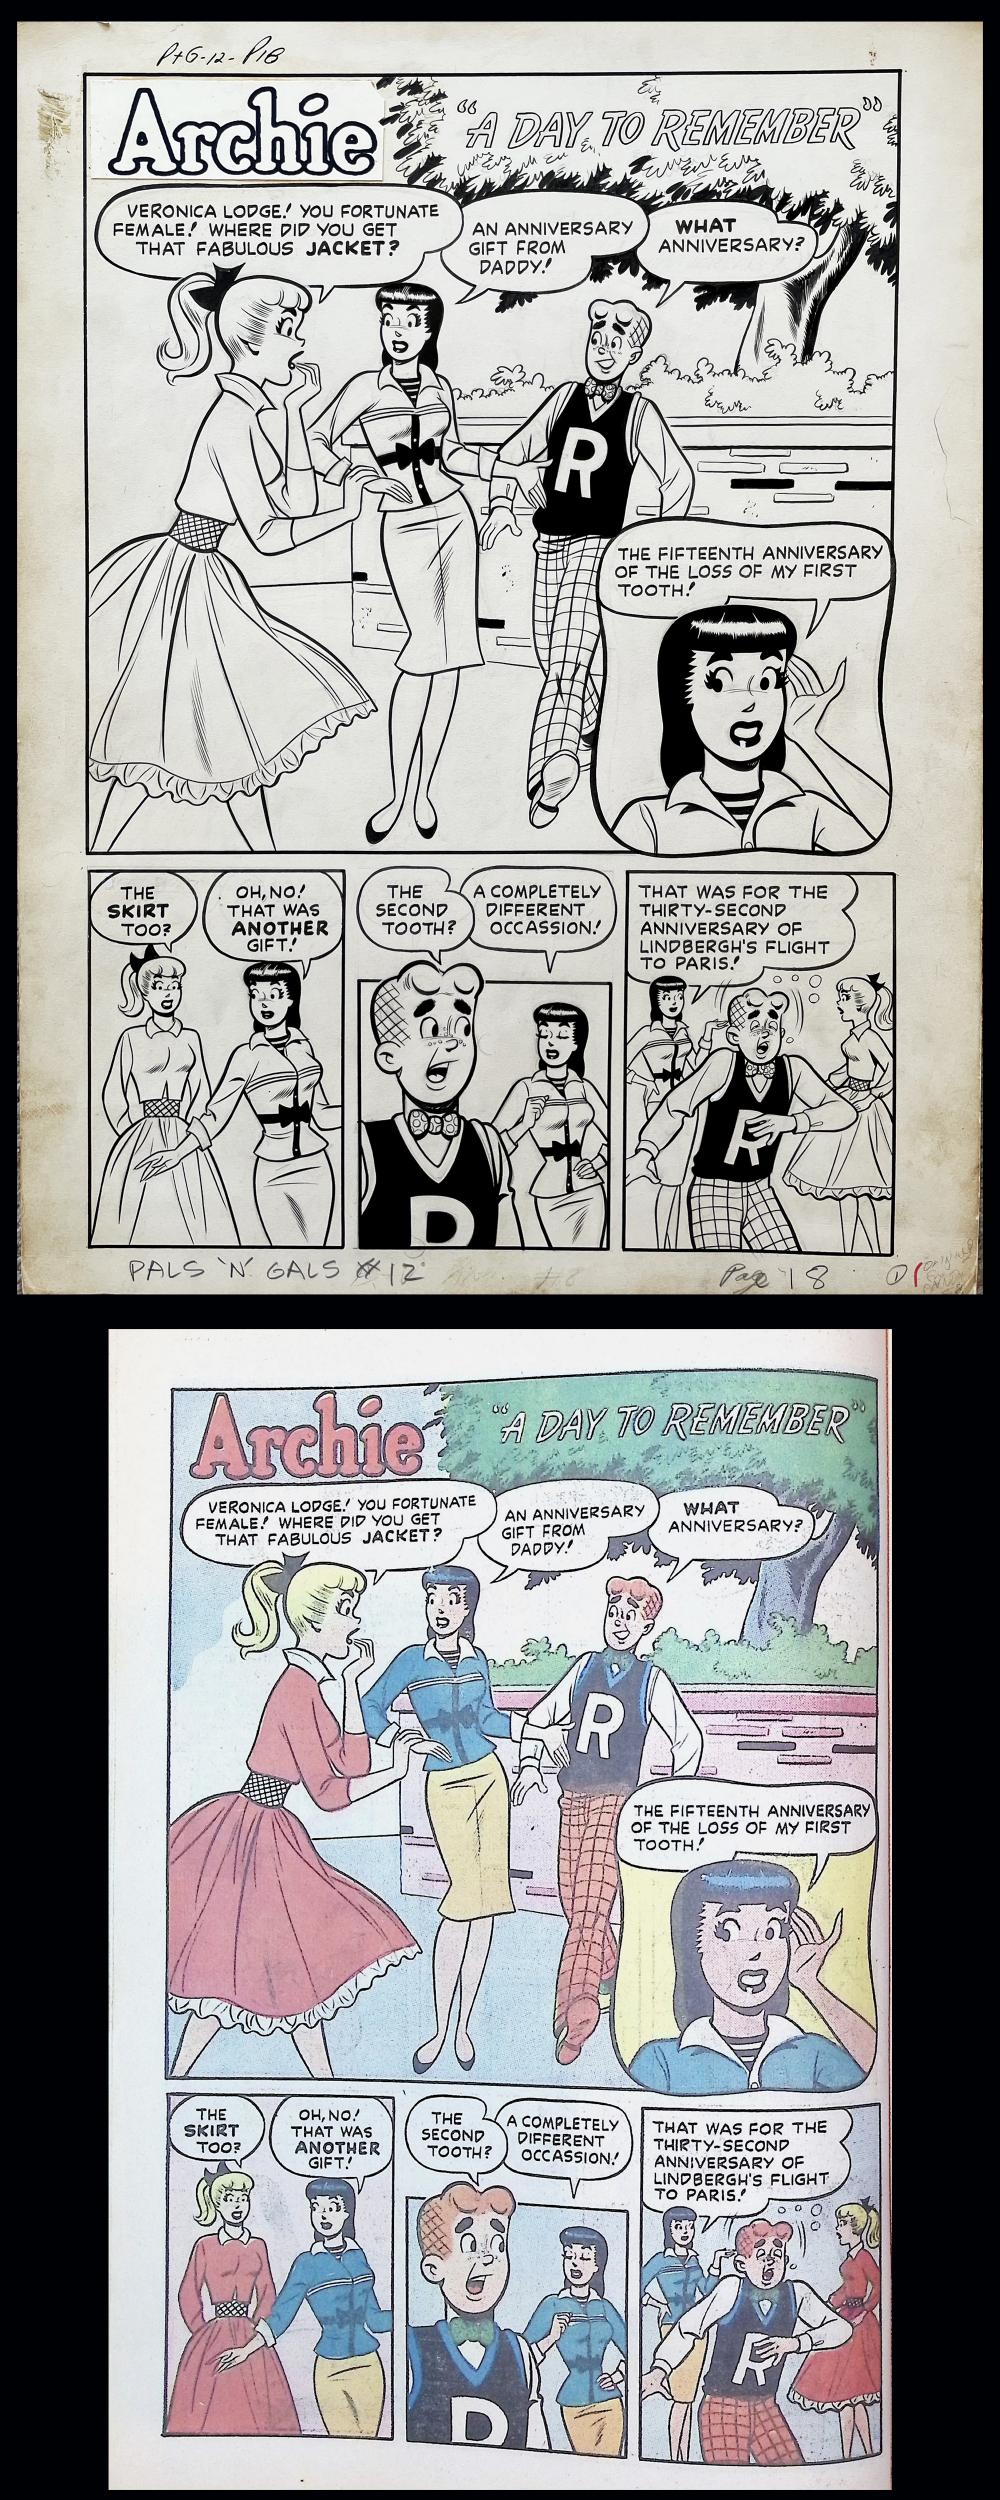 Image: Archie's Pals N Gals #12 title splash art